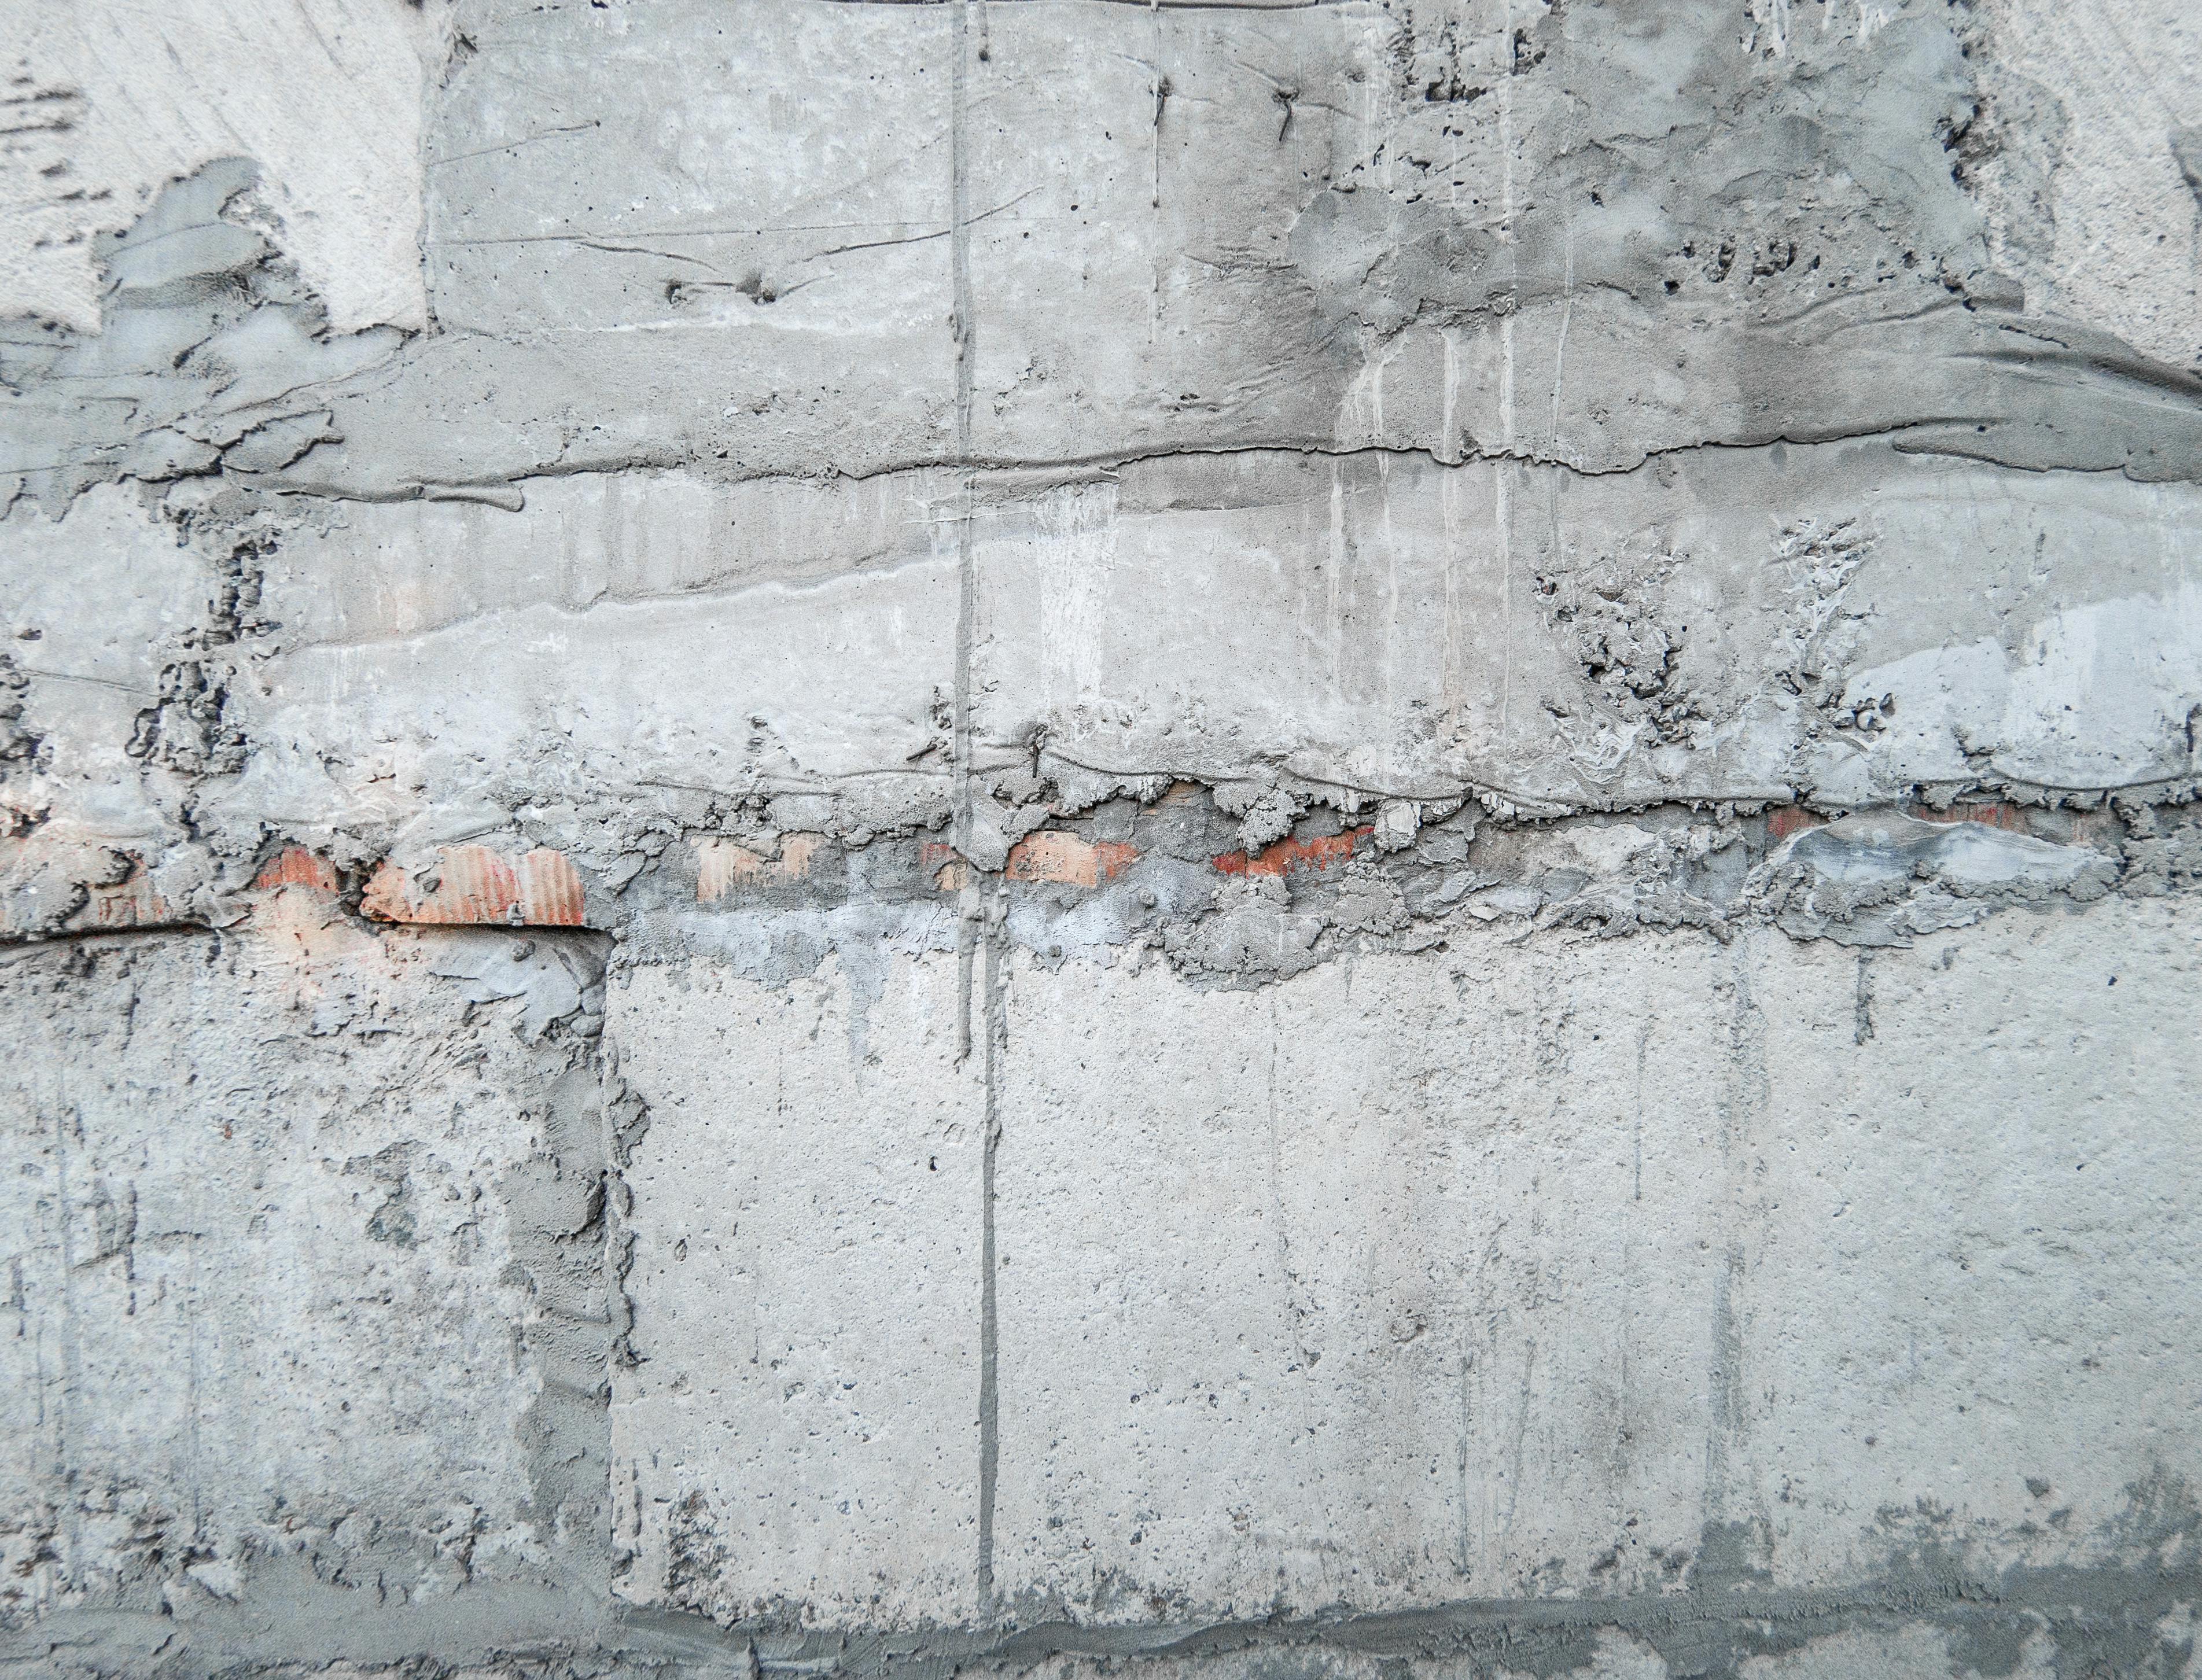 Black Concrete Blocks Wall Stock Photo - Download Image Now